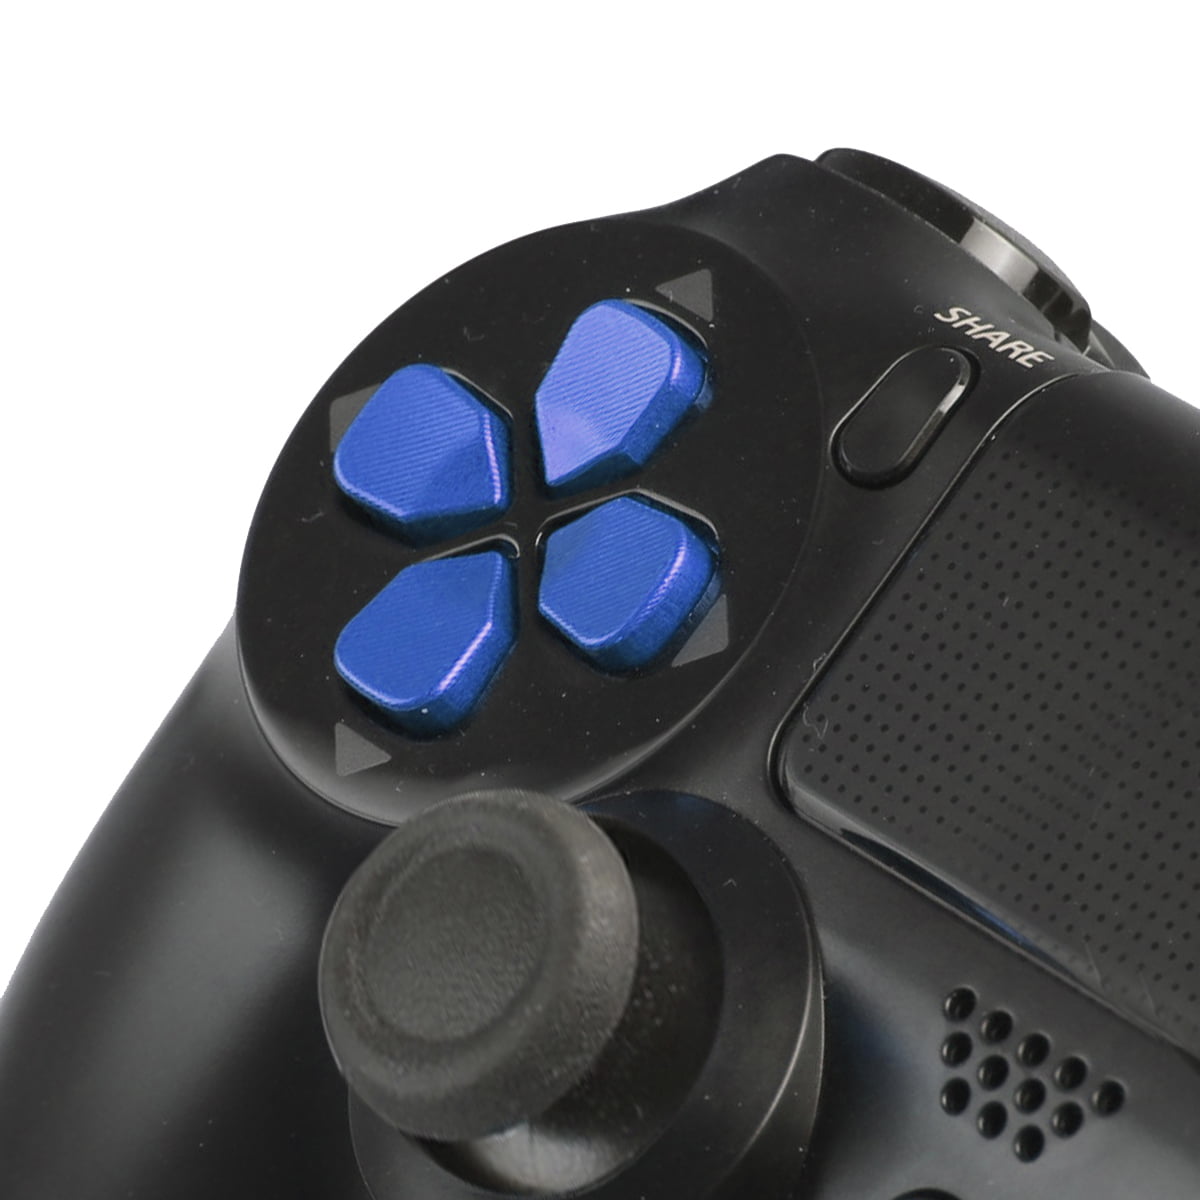 PS4 U.S. Navy Inspired PS4 Controller custom design 1 of 1 Rare